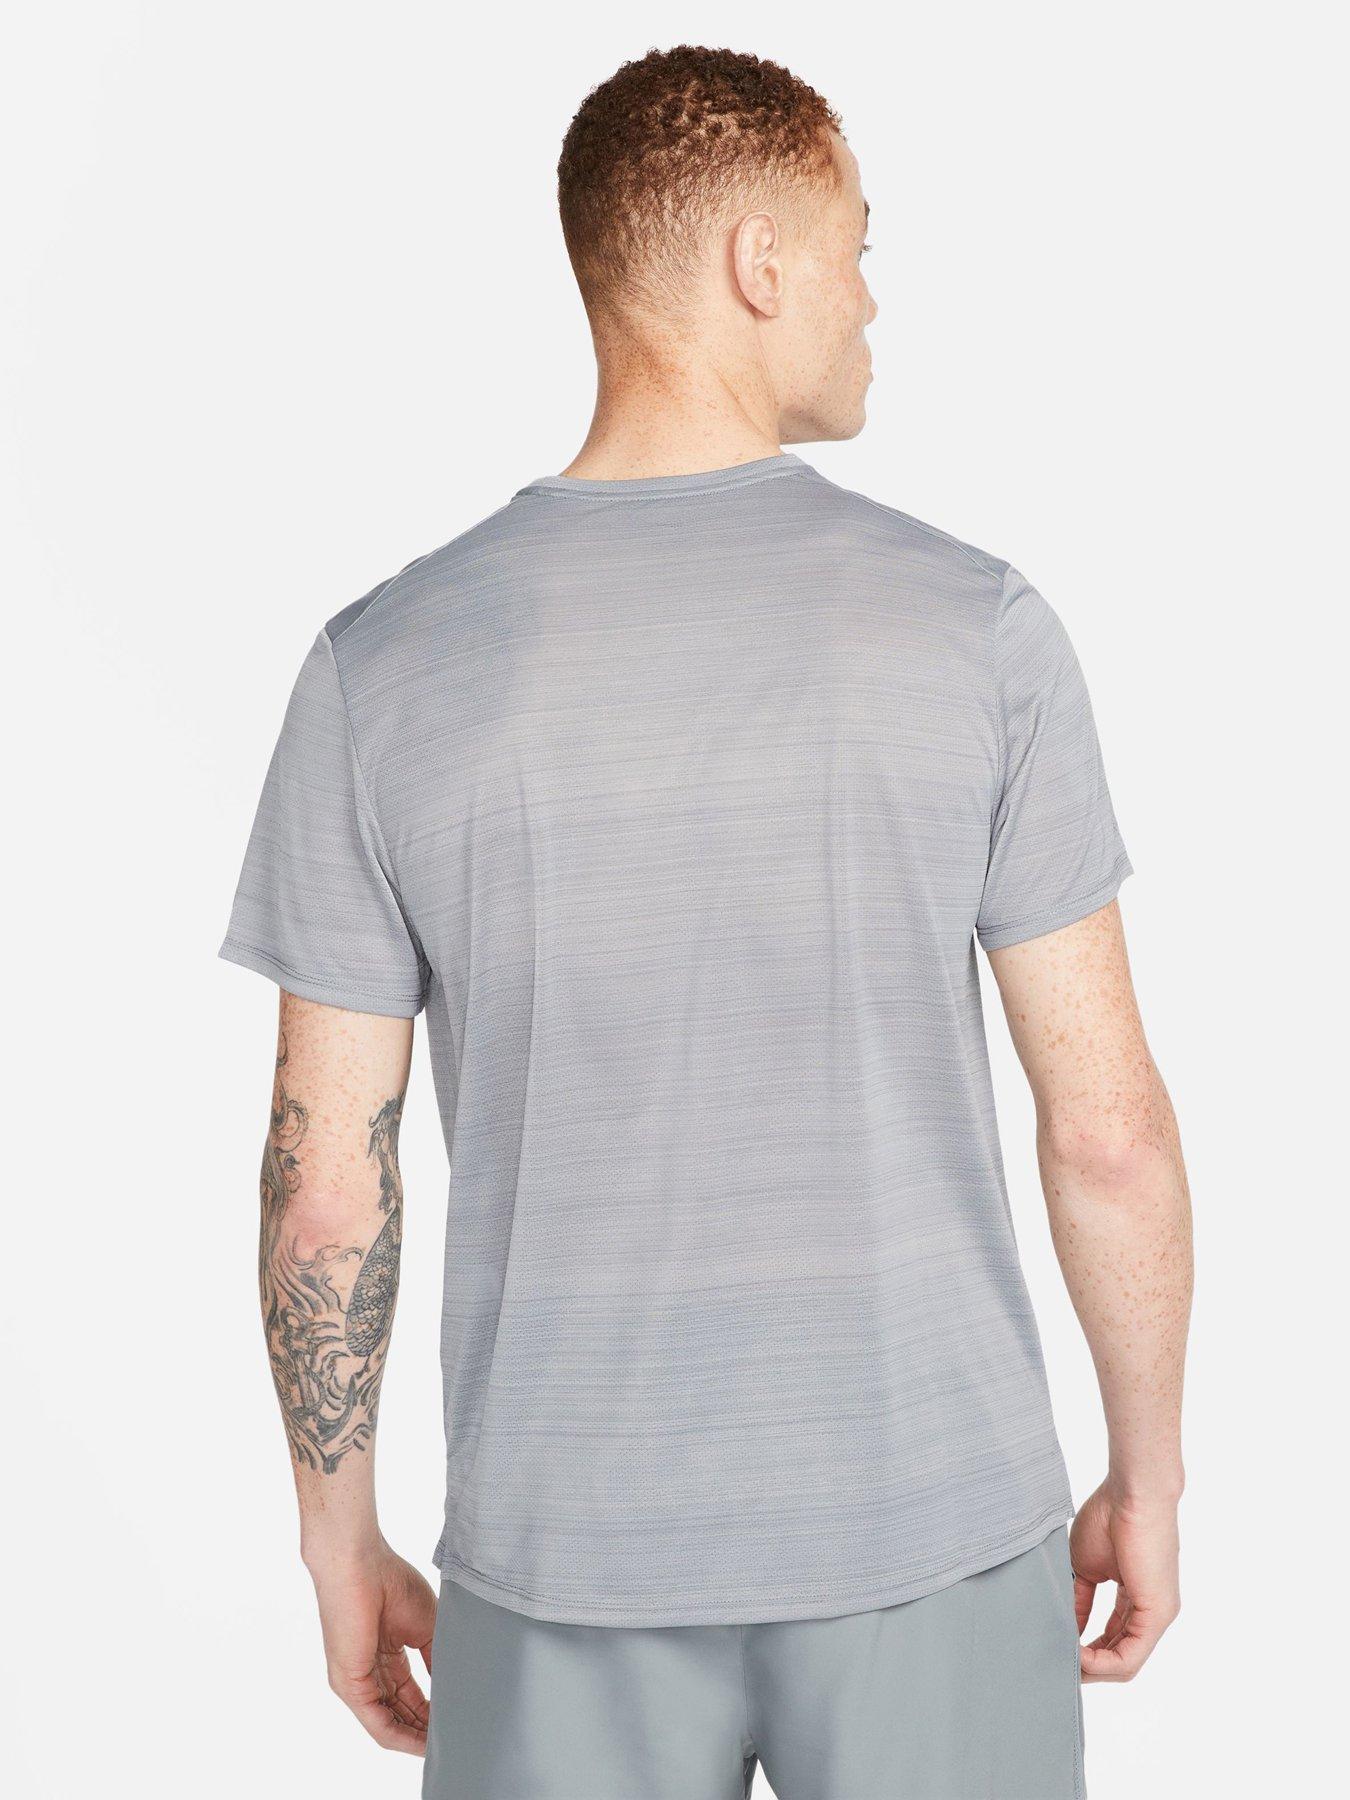 Nike Men's Dri-Fit Running Miler Breathe T-Shirt GREY | Very